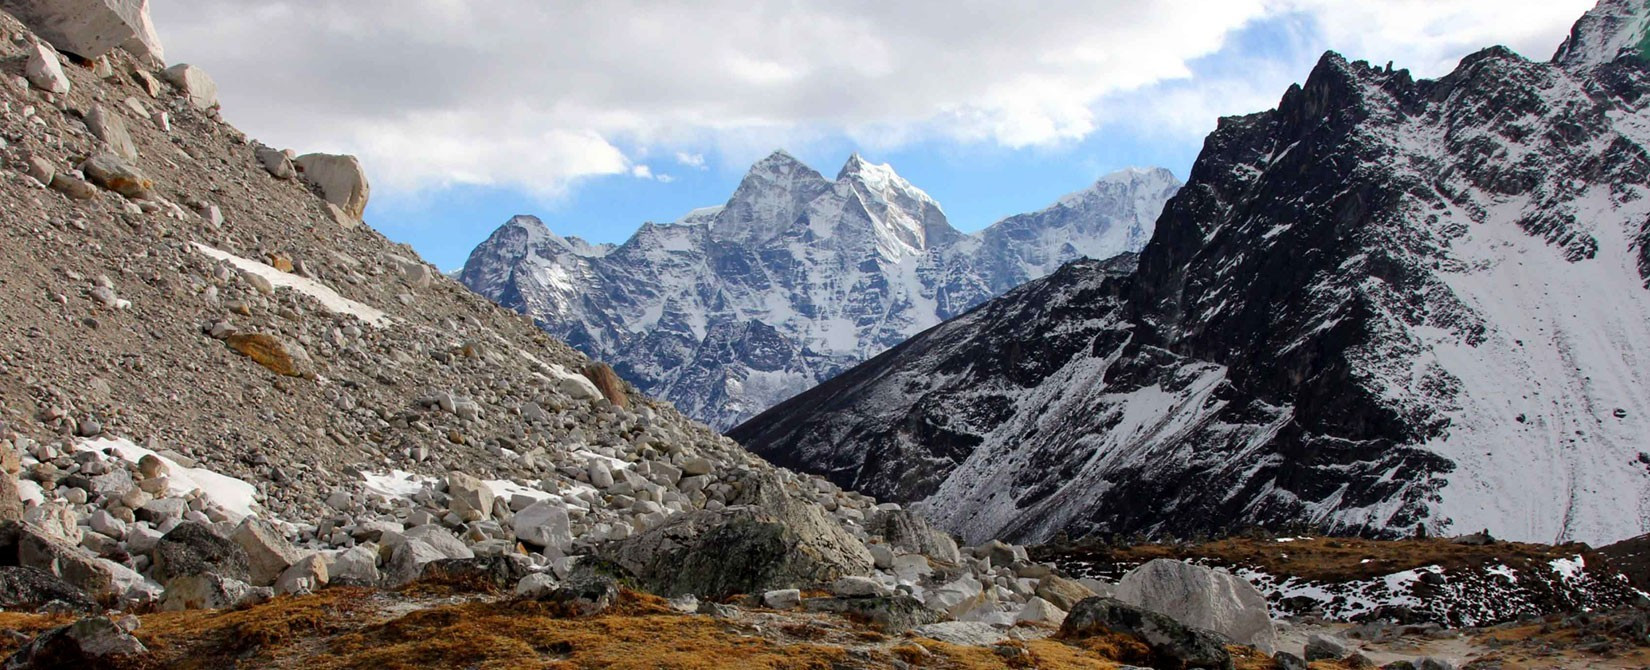 Tashi Lapcha Pass Trek via Rolwaling Valley